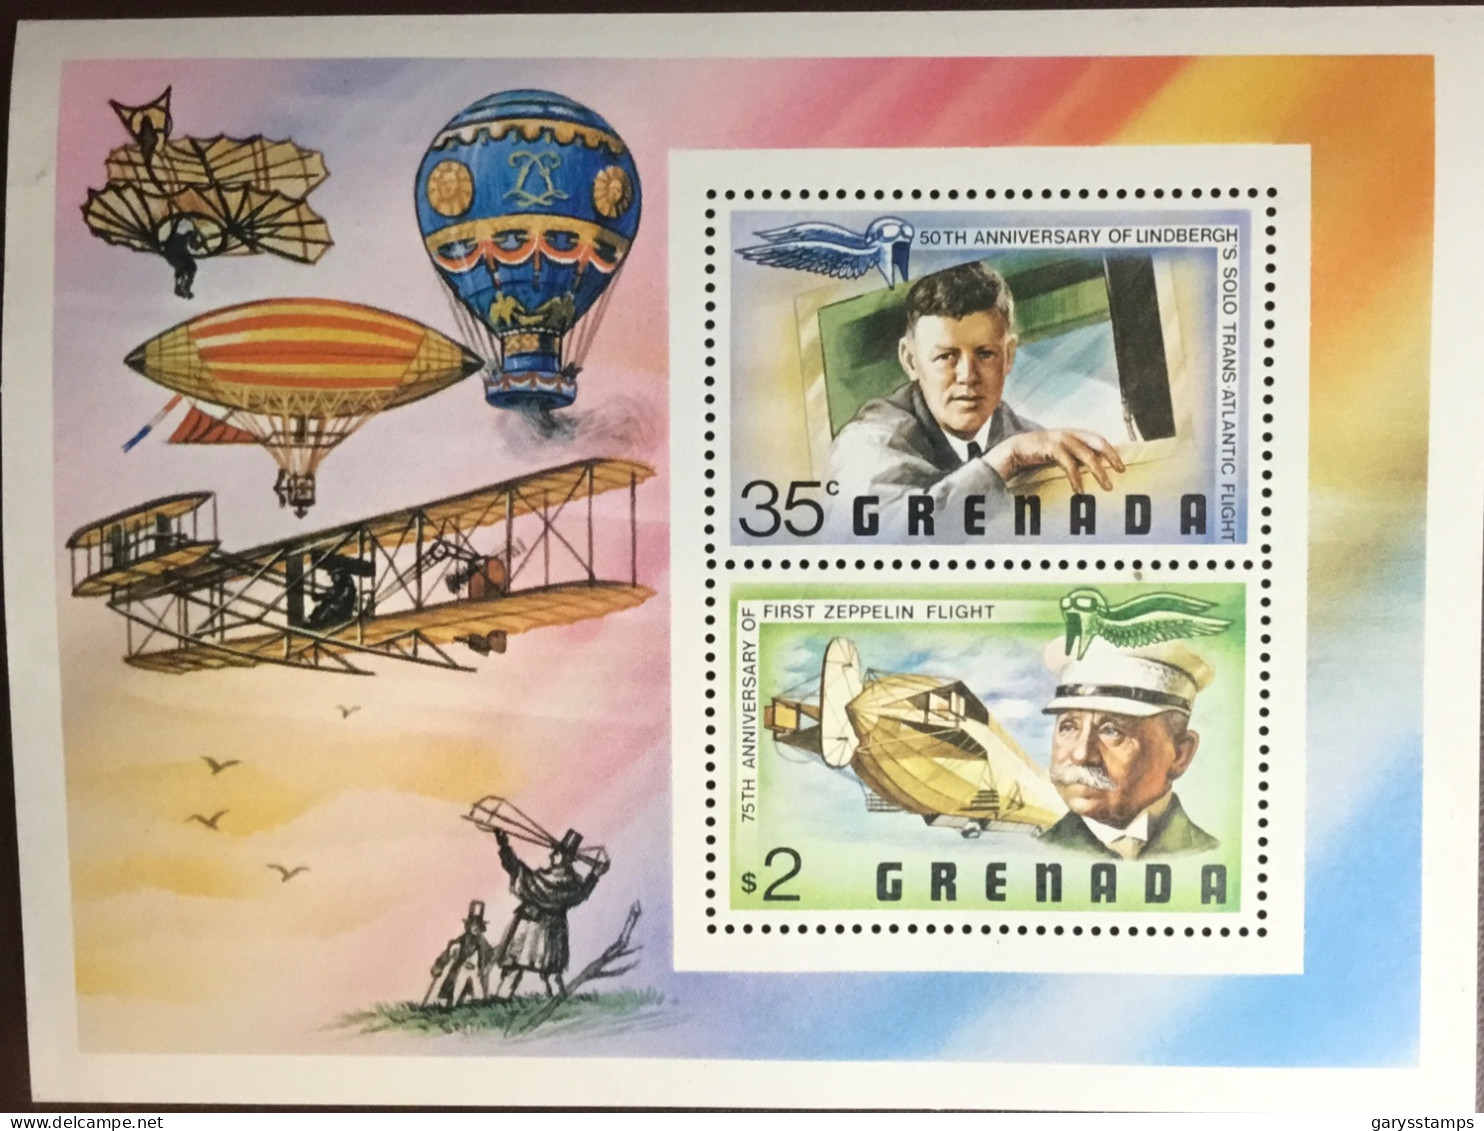 Grenada 1978 Zeppelin & Lindbergh Anniversaries Minisheet MNH - Grenada (1974-...)